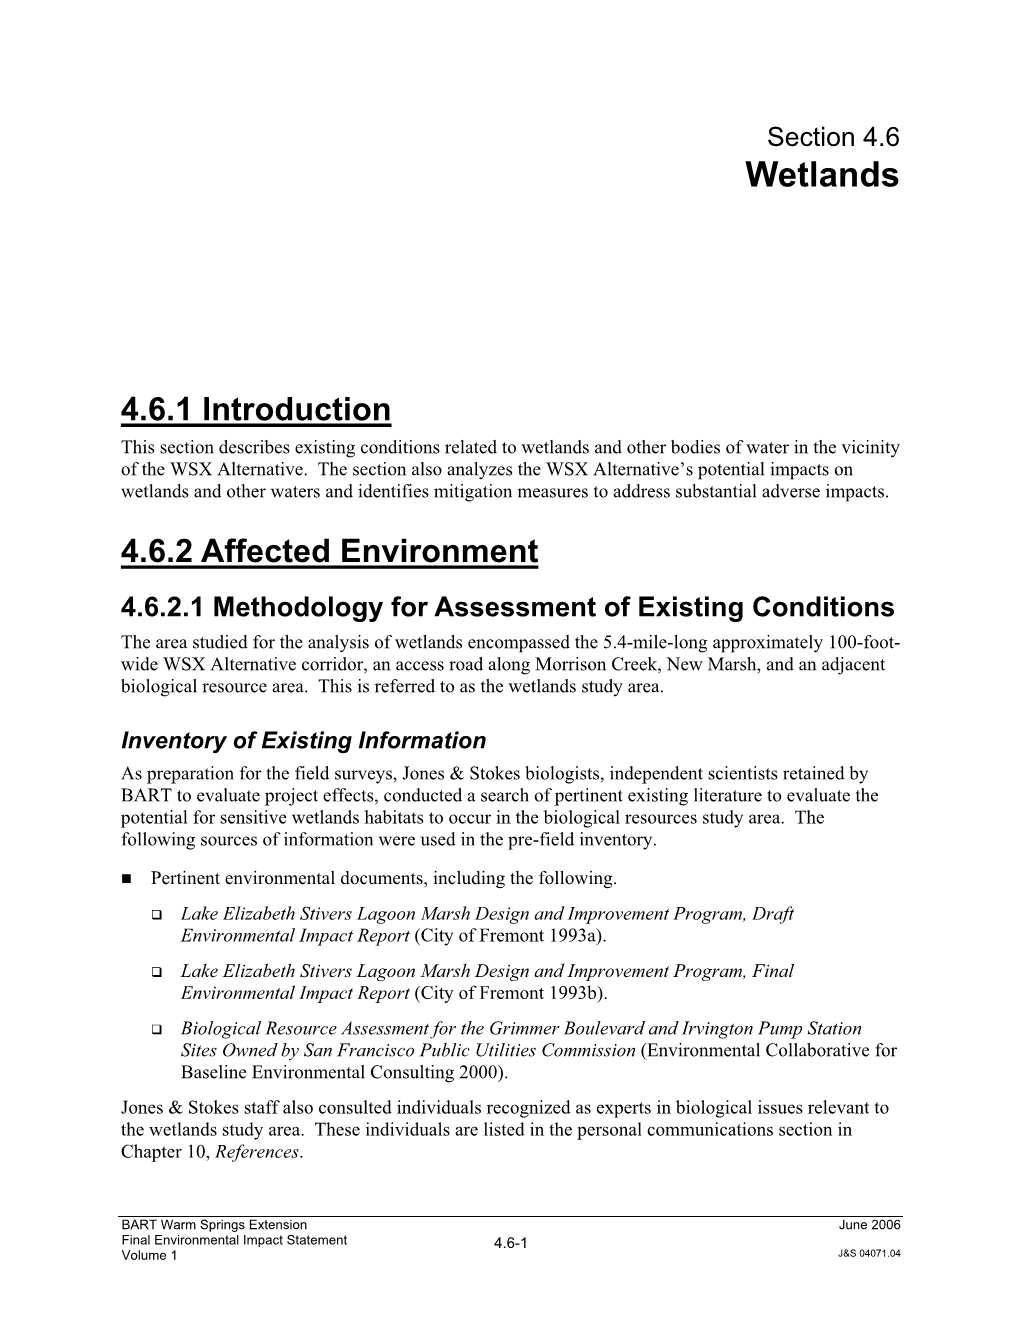 Section 4.6 Wetlands